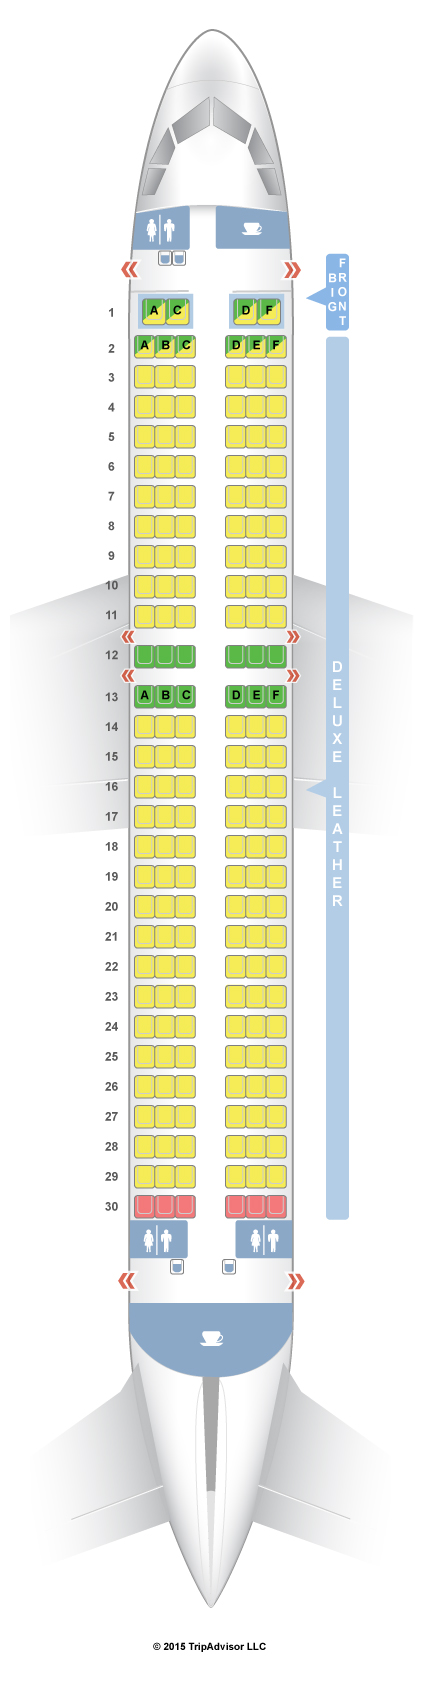 Spirit A320 Seating Chart